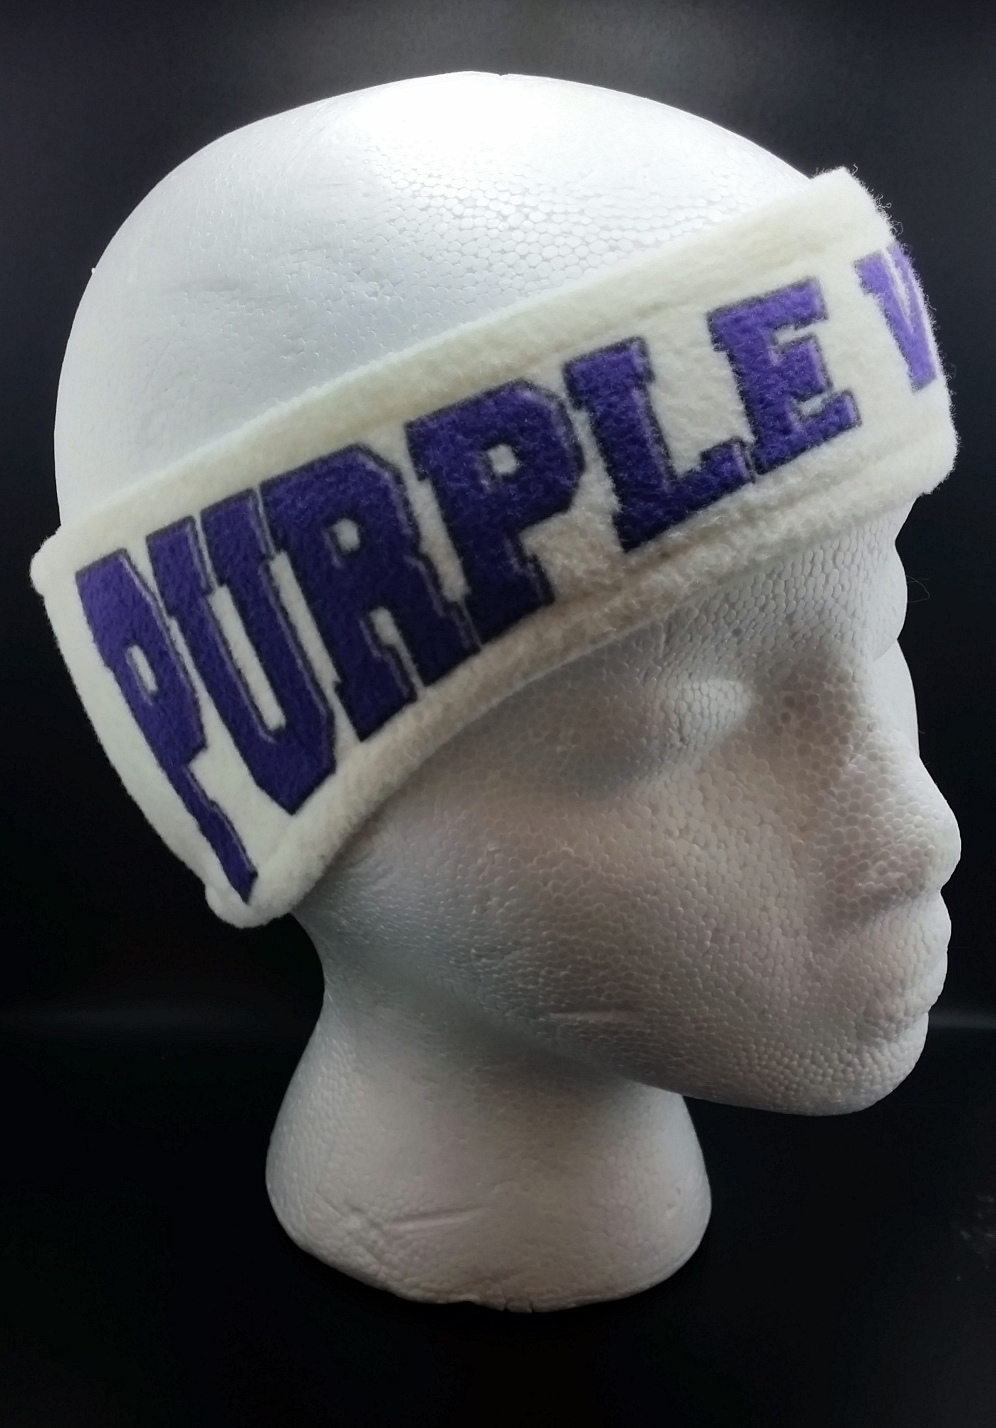 Fleece headband earwarmer made with sublimation printing